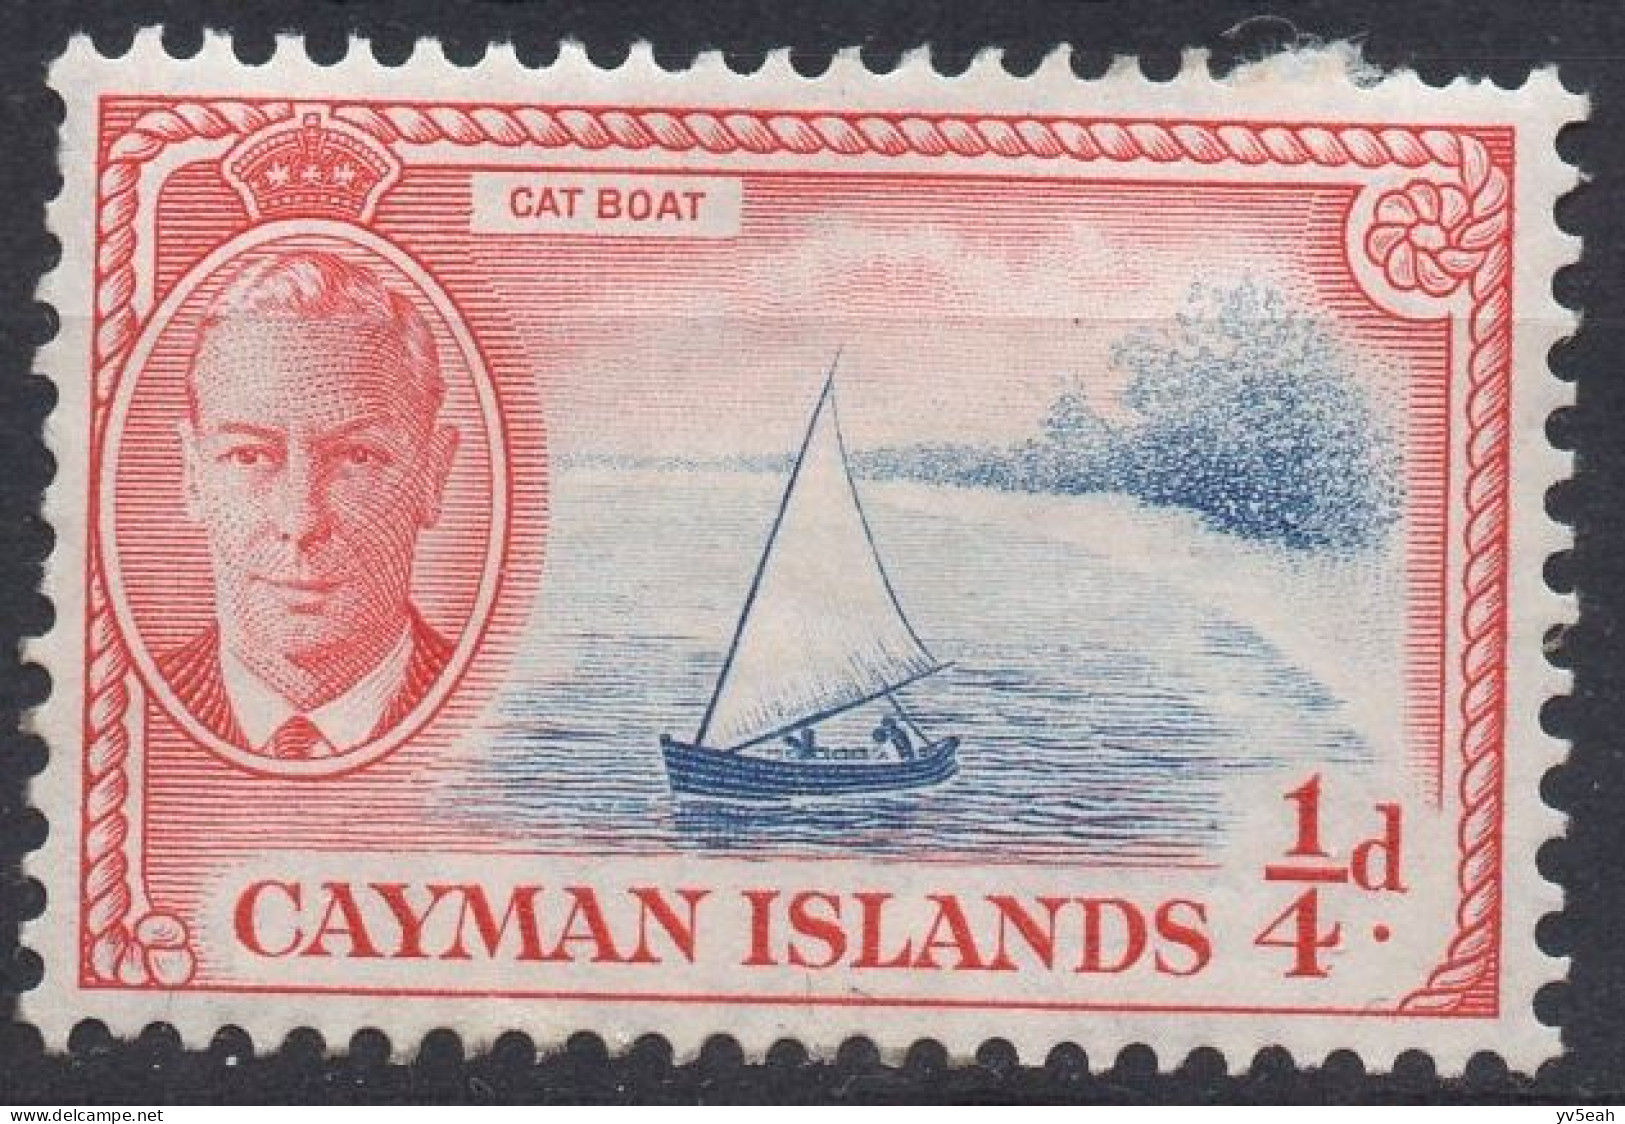 CAYMAN ISLAND/1950/MH/SC#122/KING GEORGE VI / KGVI / CATBOAT/ 1/4p ROSE RED & BLUE - Cayman Islands